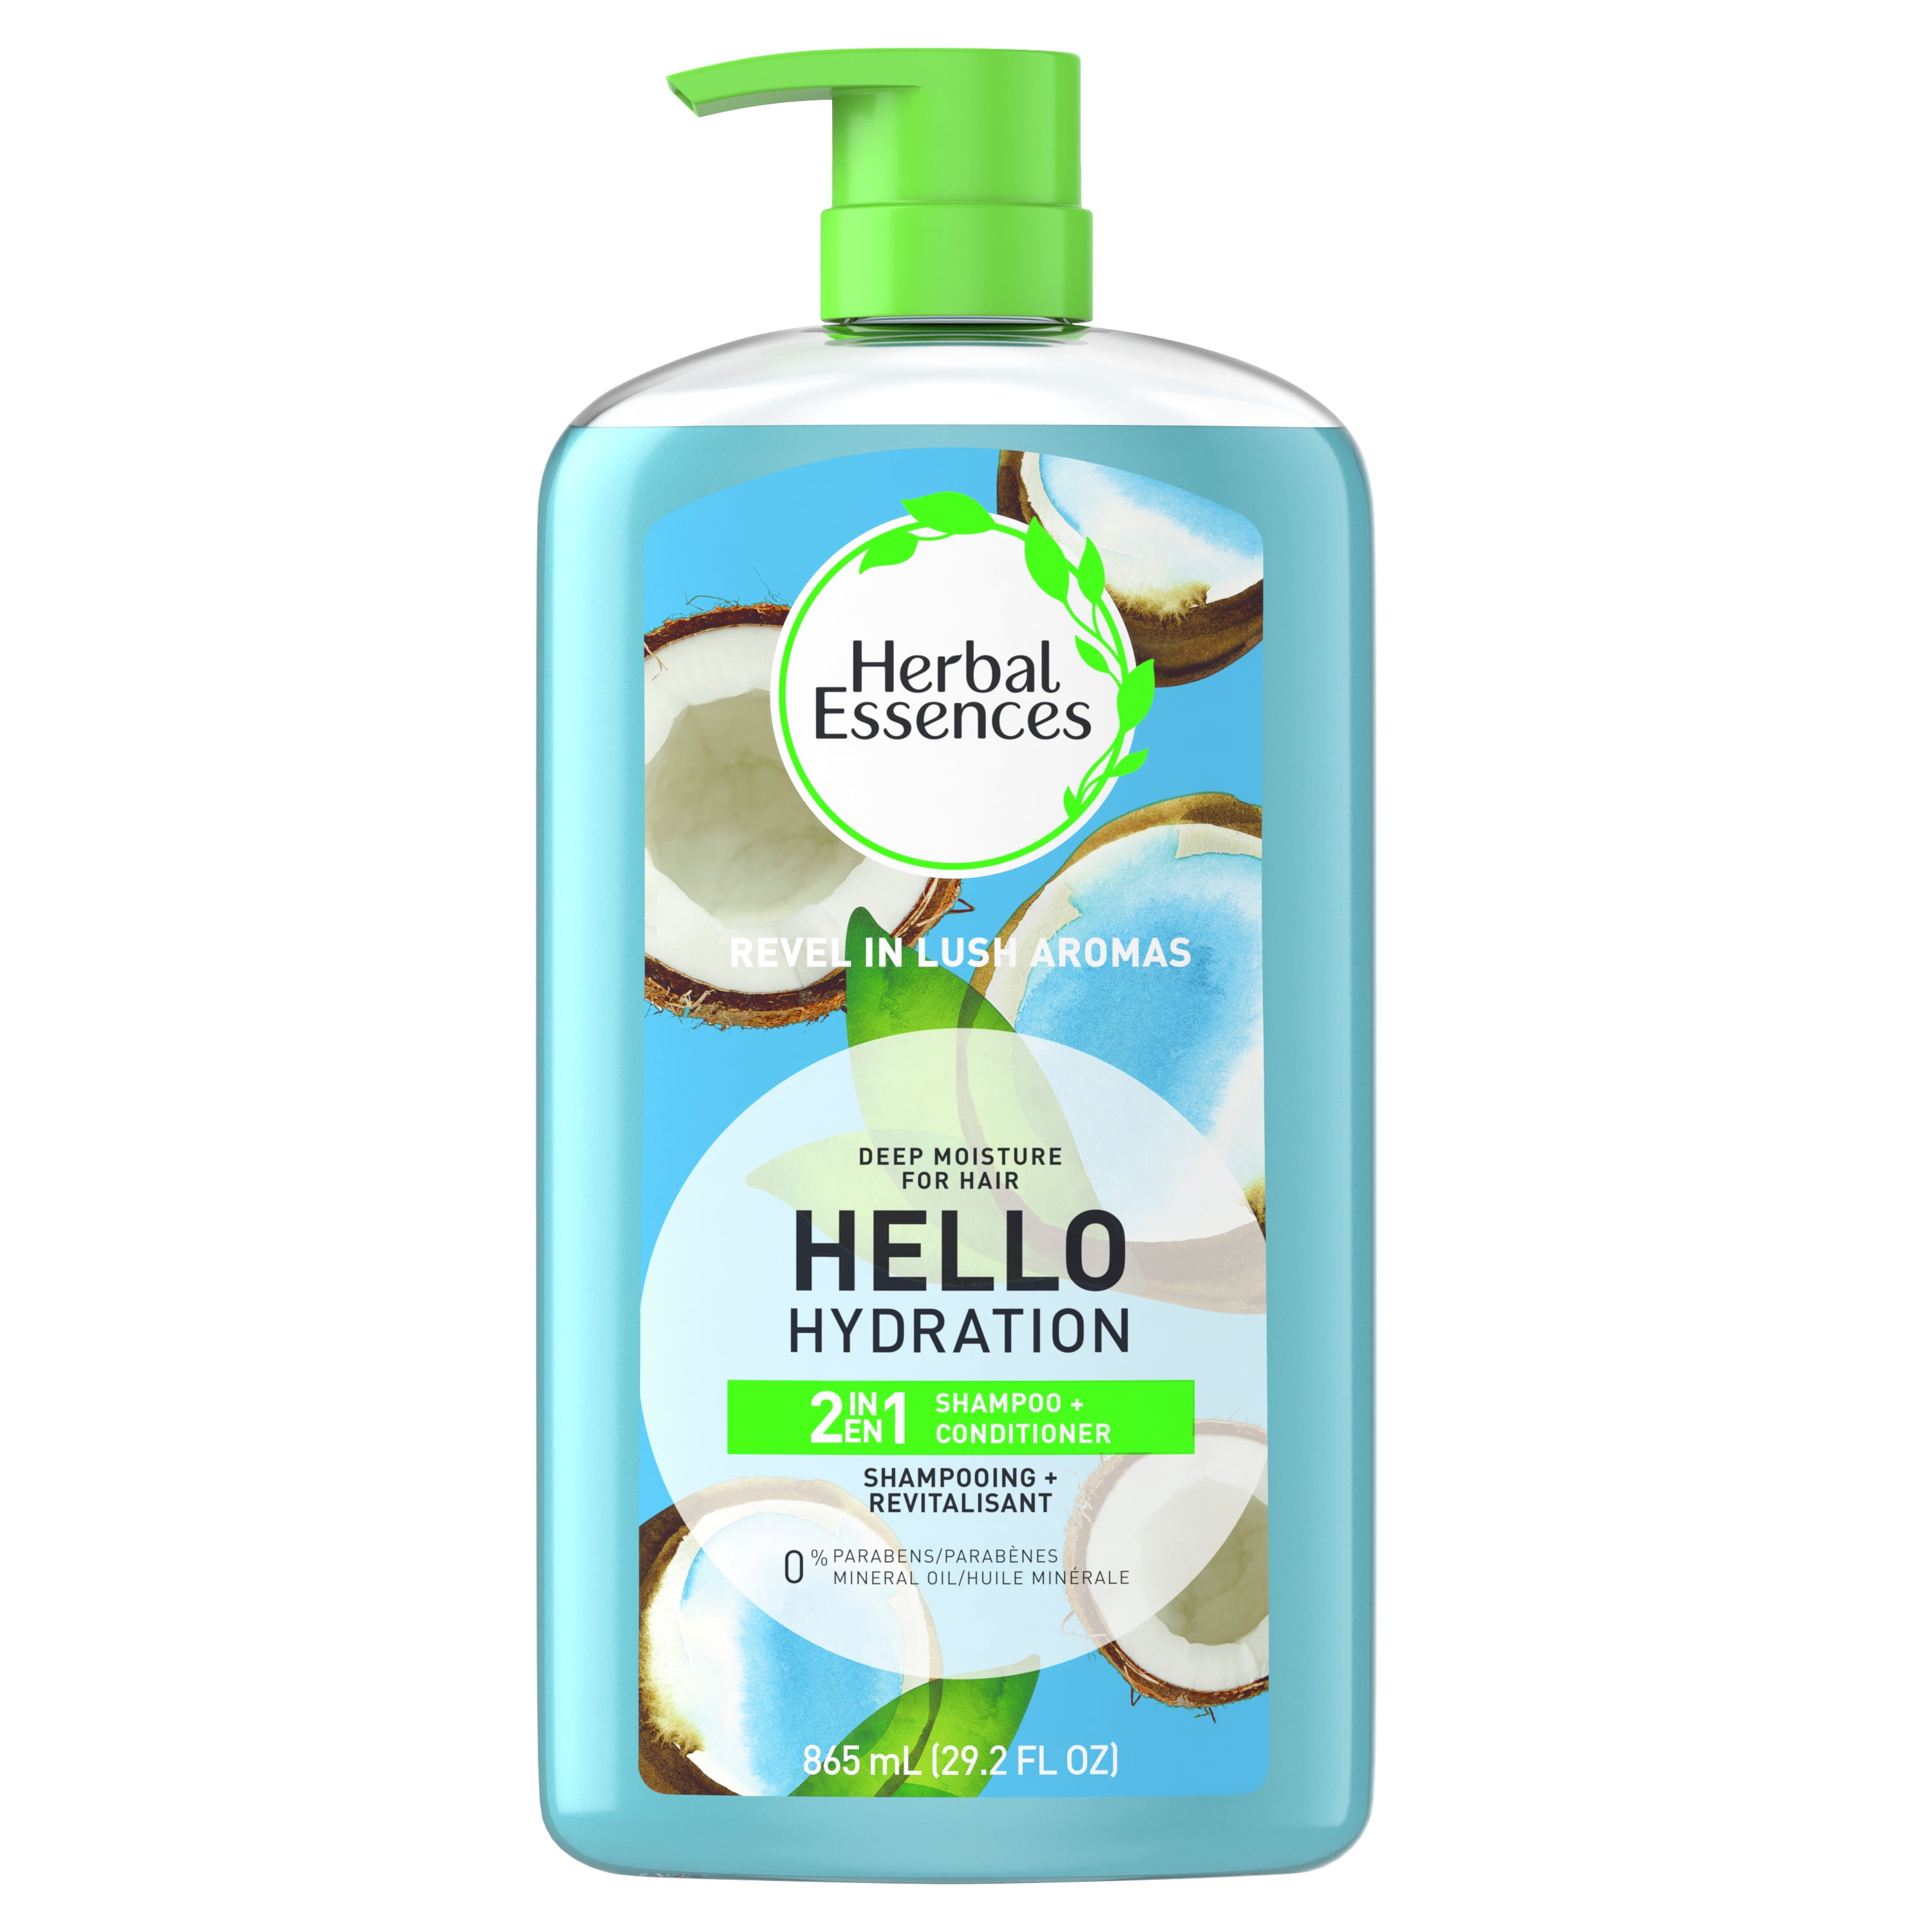 Herbal Essences Hello Hydration 2IN1 Shampoo Conditioner, Moisture for Hair  29.2 fl oz - Walmart.com